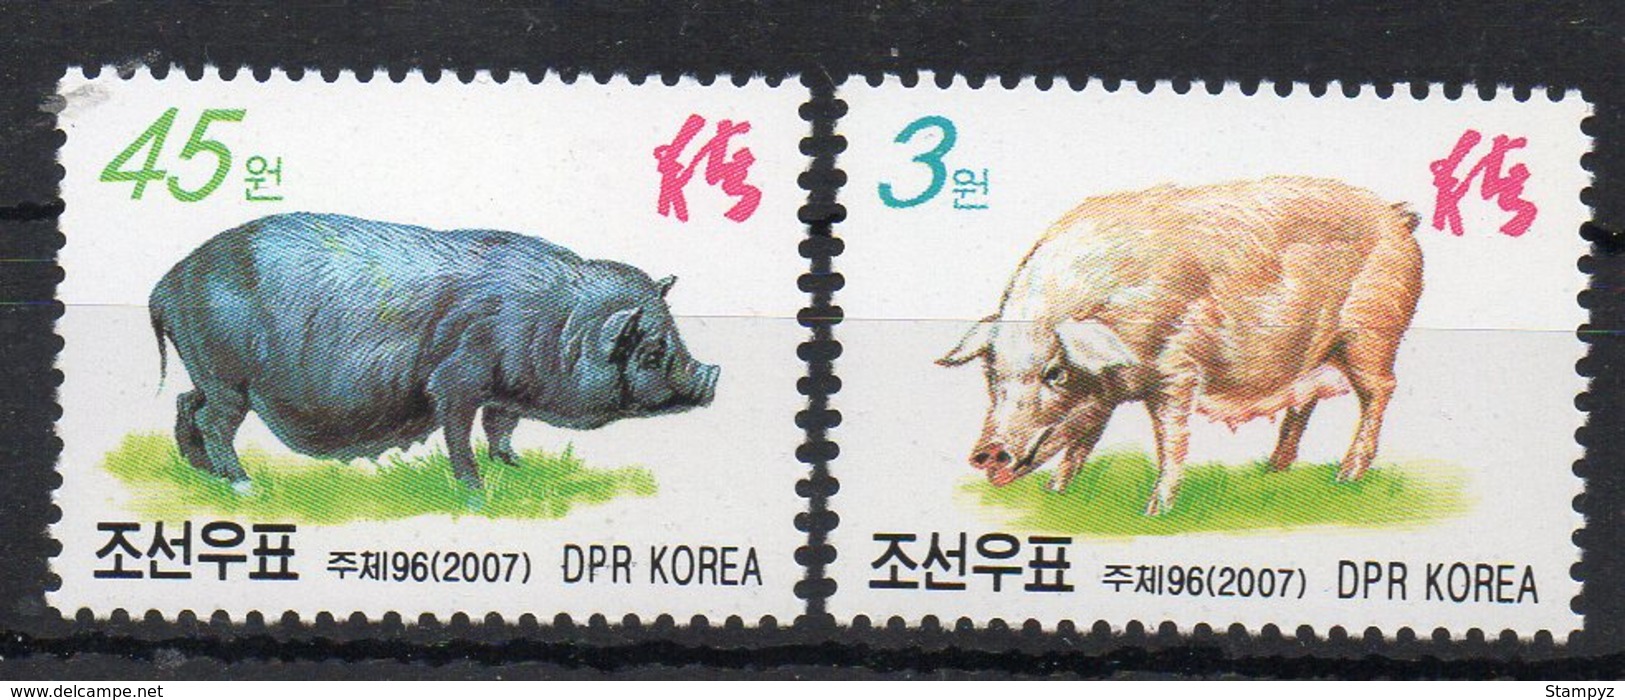 COREE DU NORD - NORTH KOREA - ANIMAUX DE LA FERME - FARM ANIMALS - PIGS - COCHONS - 2007 - - Korea, North